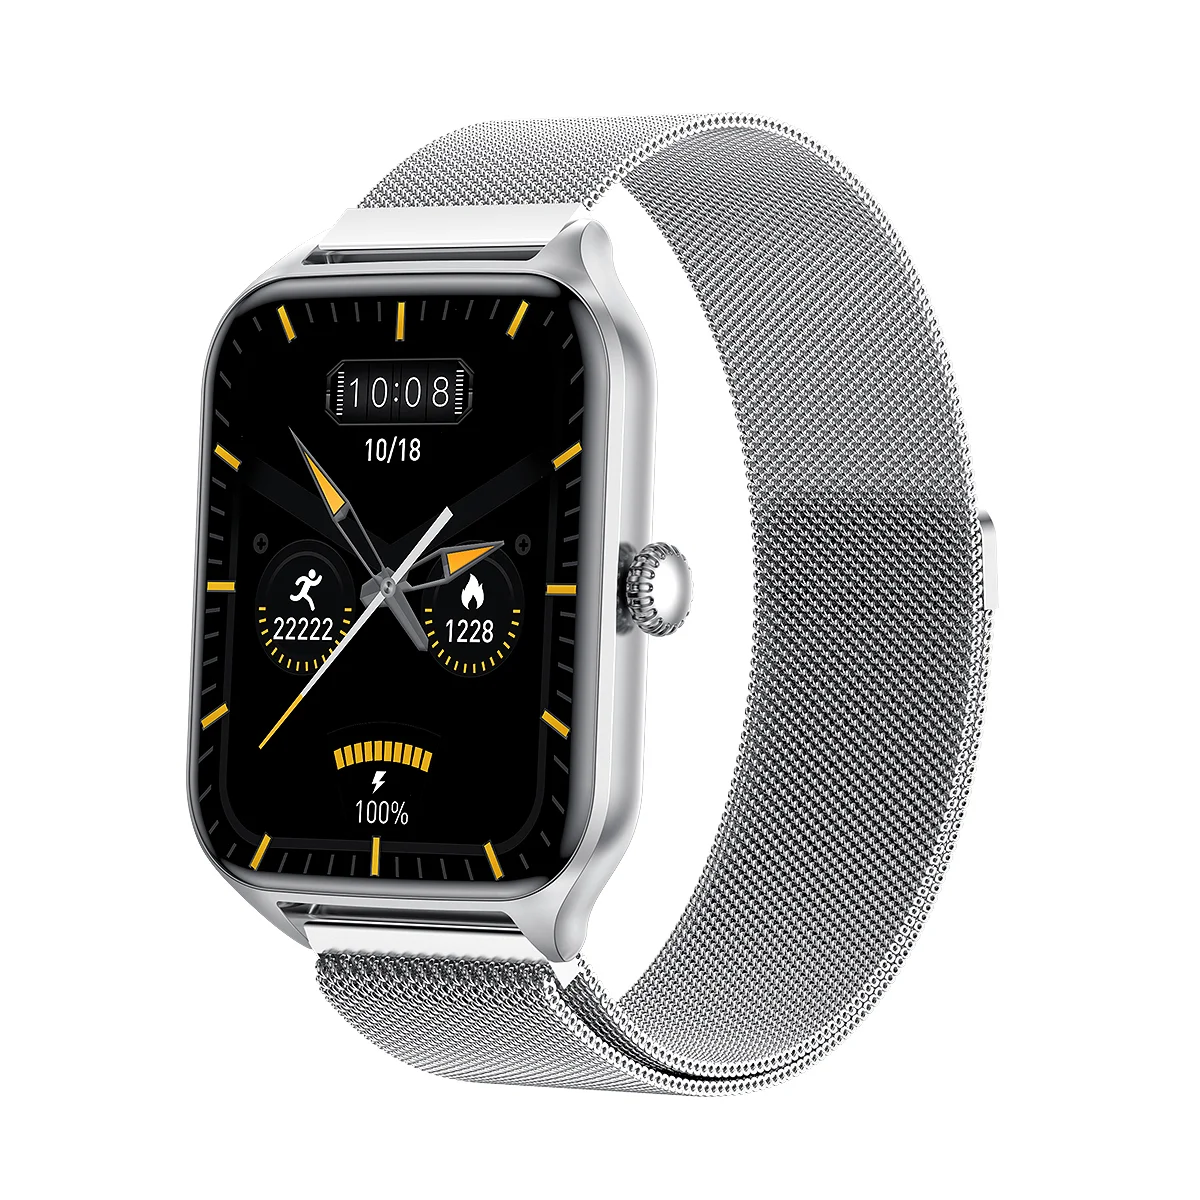 Reward Watch Offers Customizable Smartwatch Services to Help Users Achieve Their Health Goals